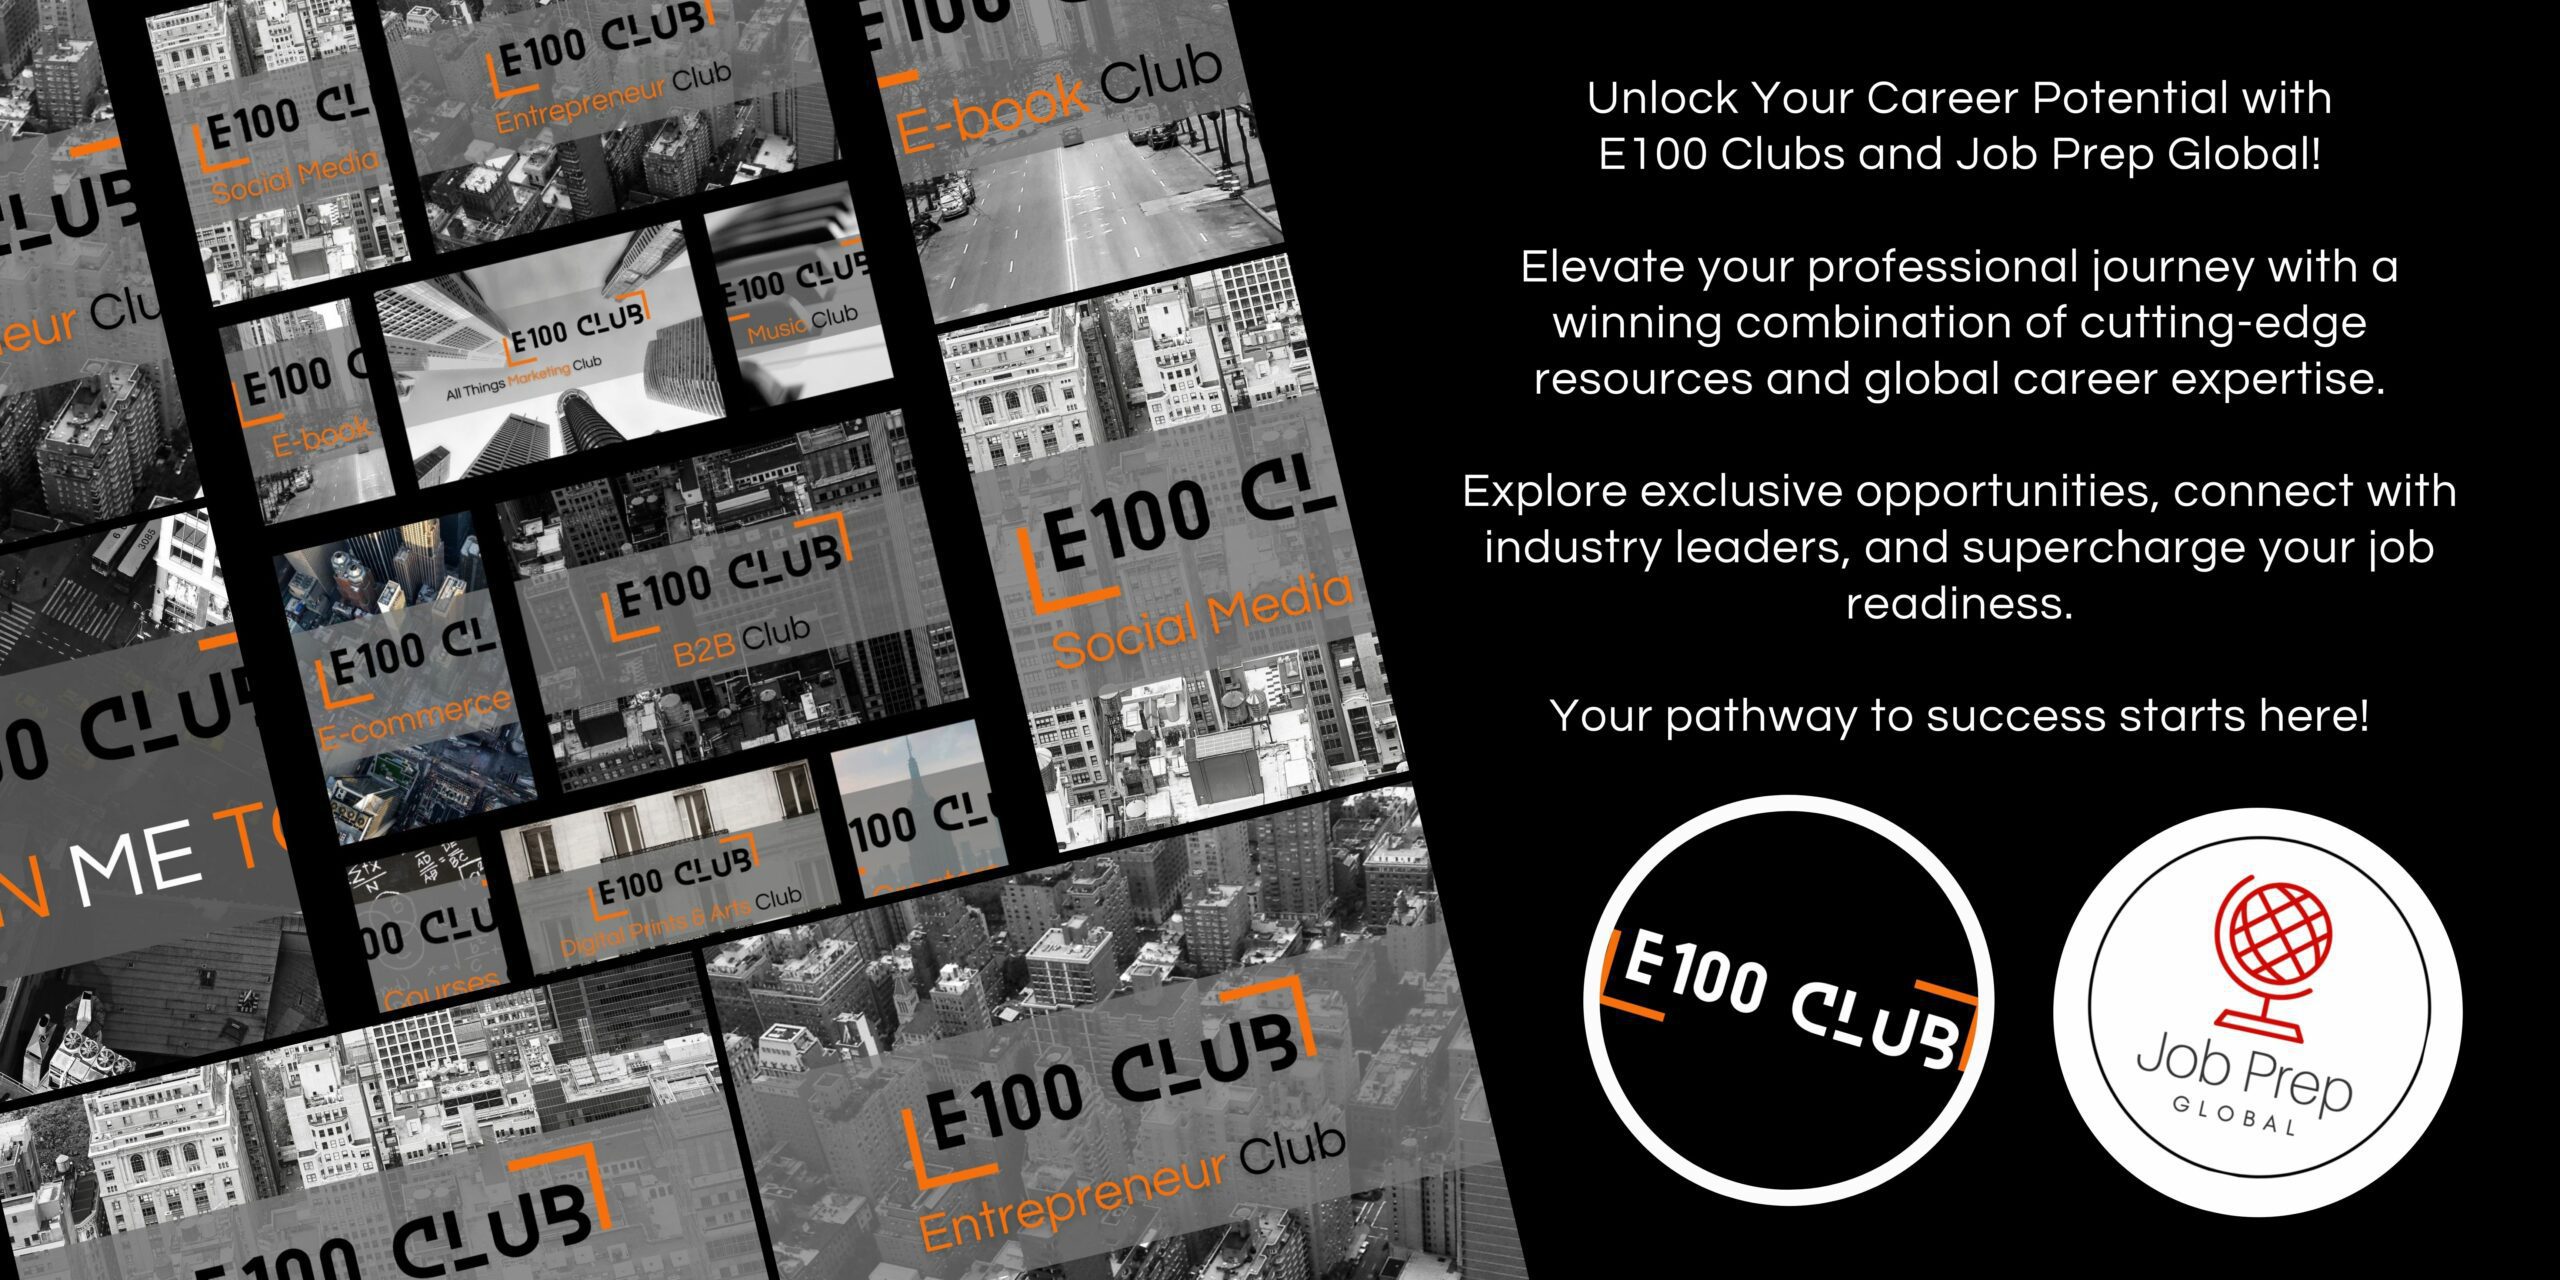 E100 Club: The International Business School for Entrepreneurship